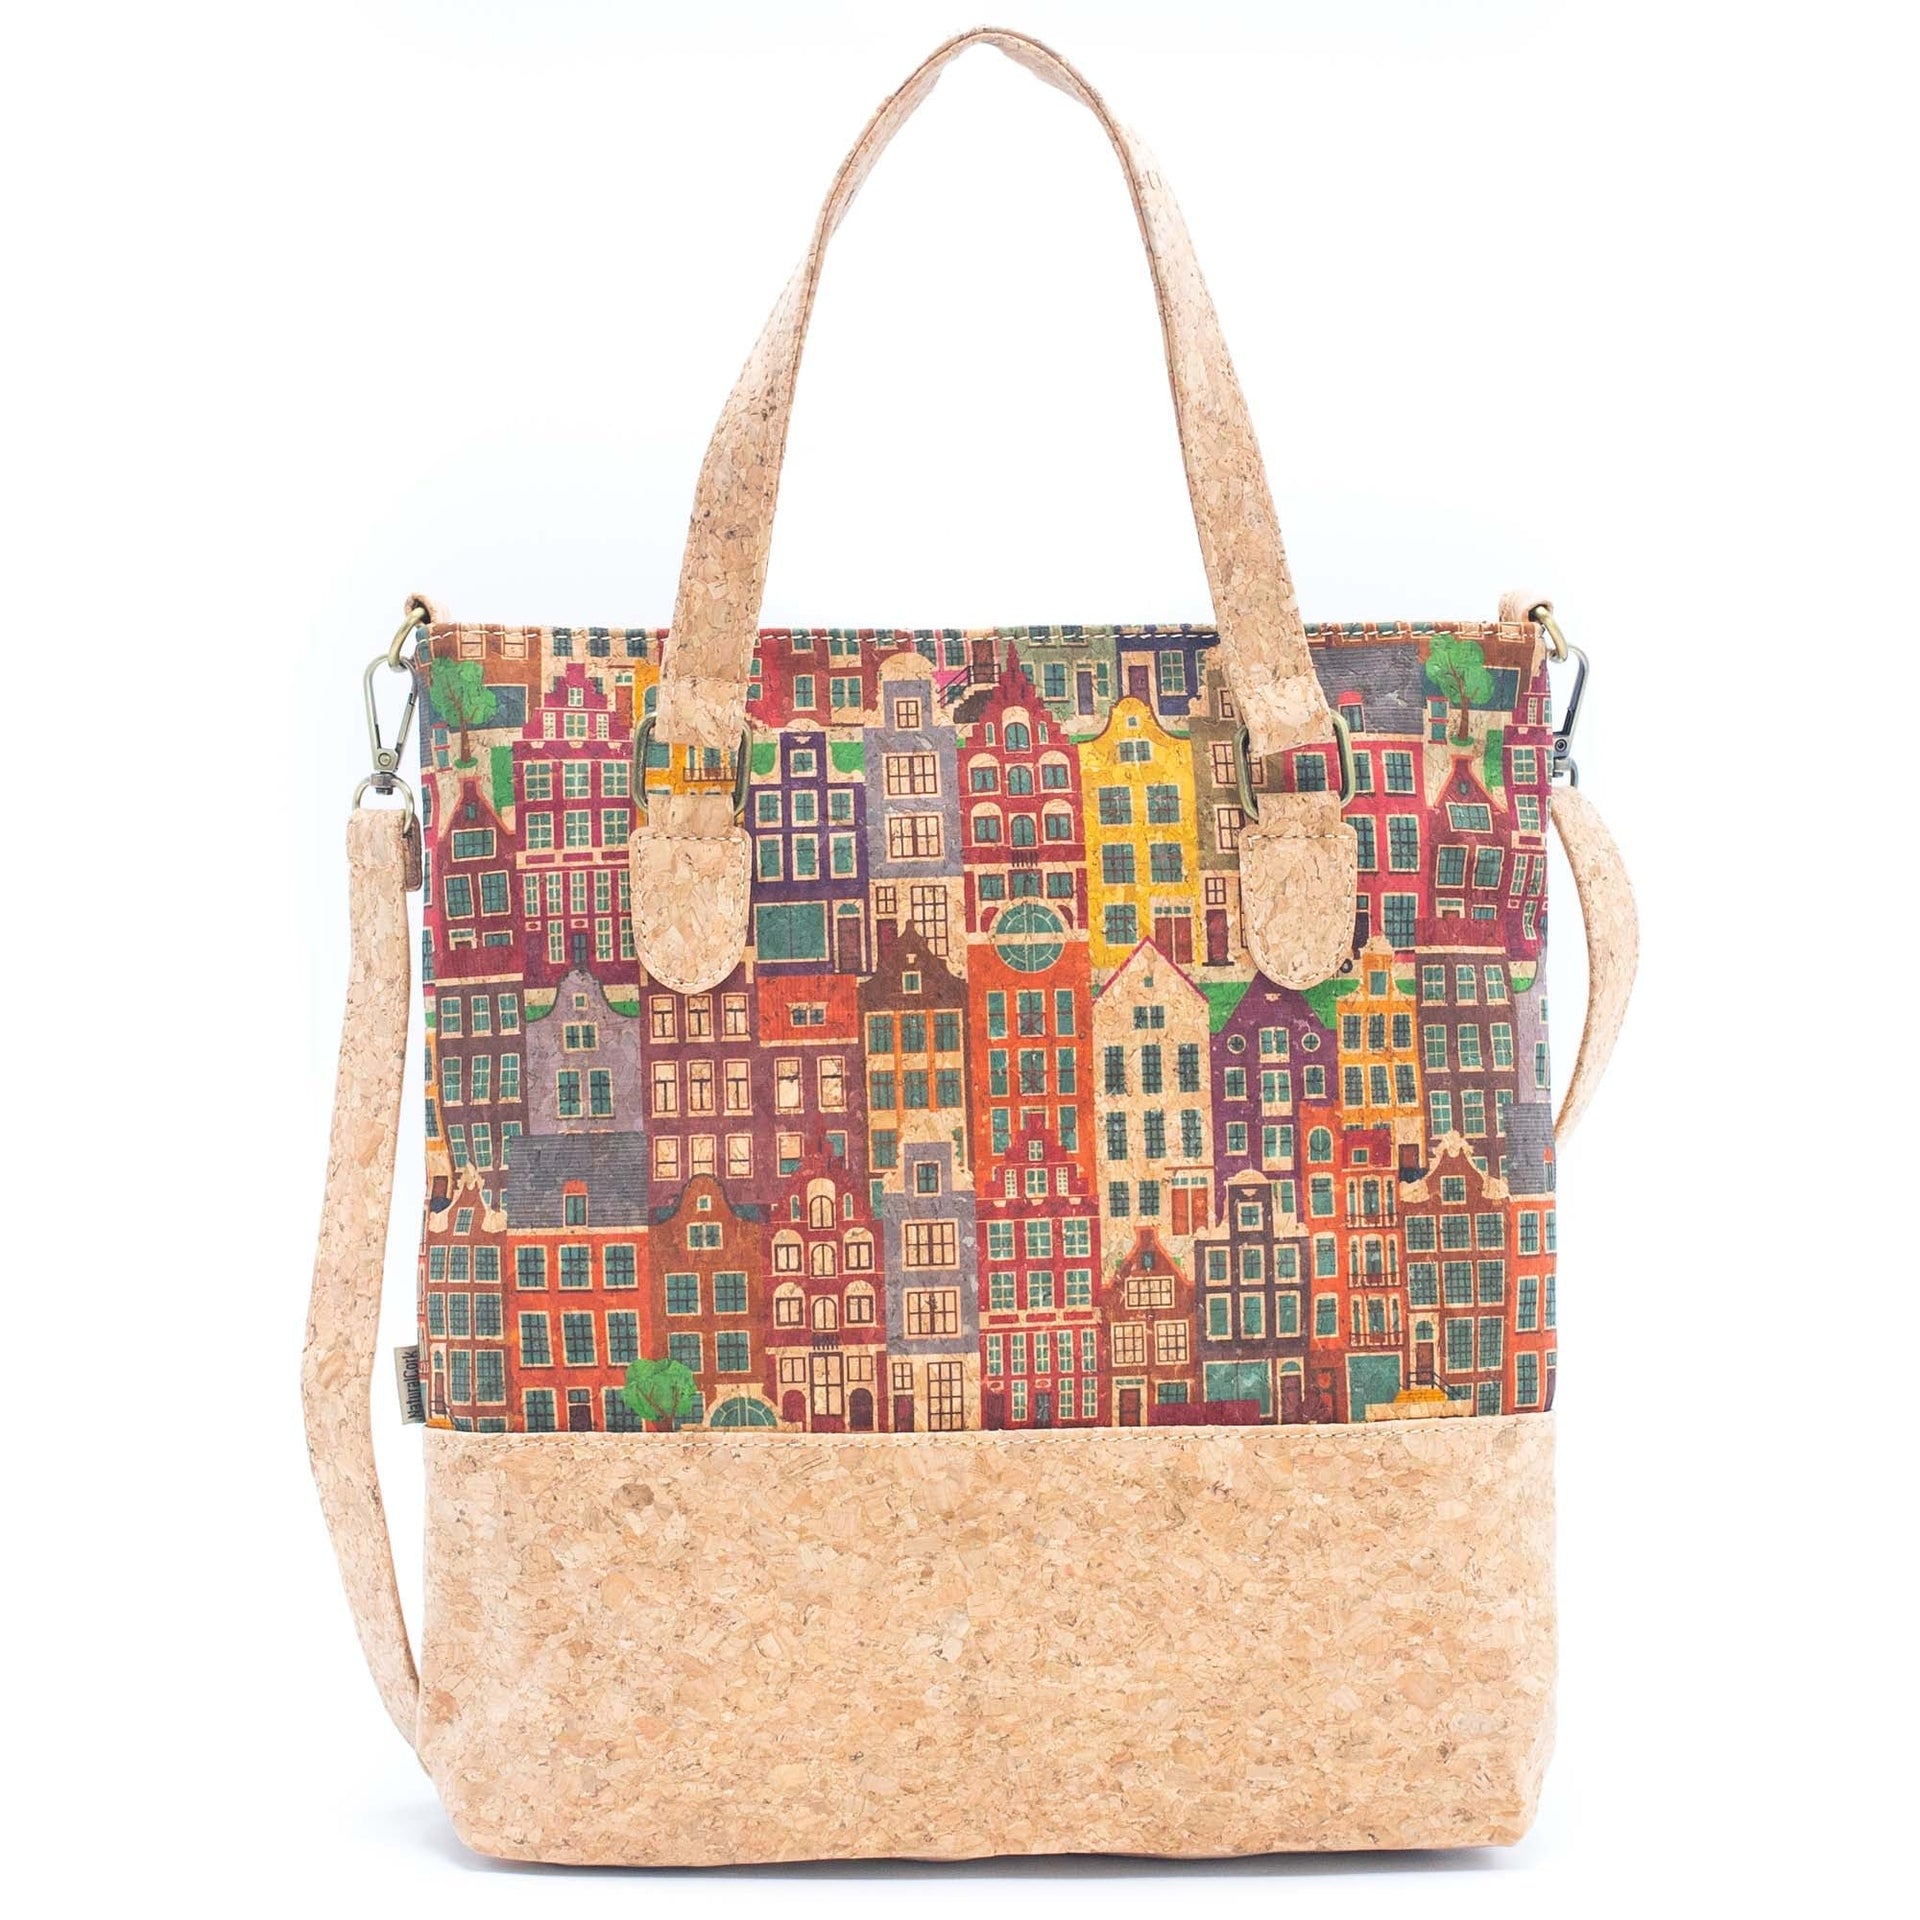 Shop Cork Handbags for Women, The Vegan Collection of Purses